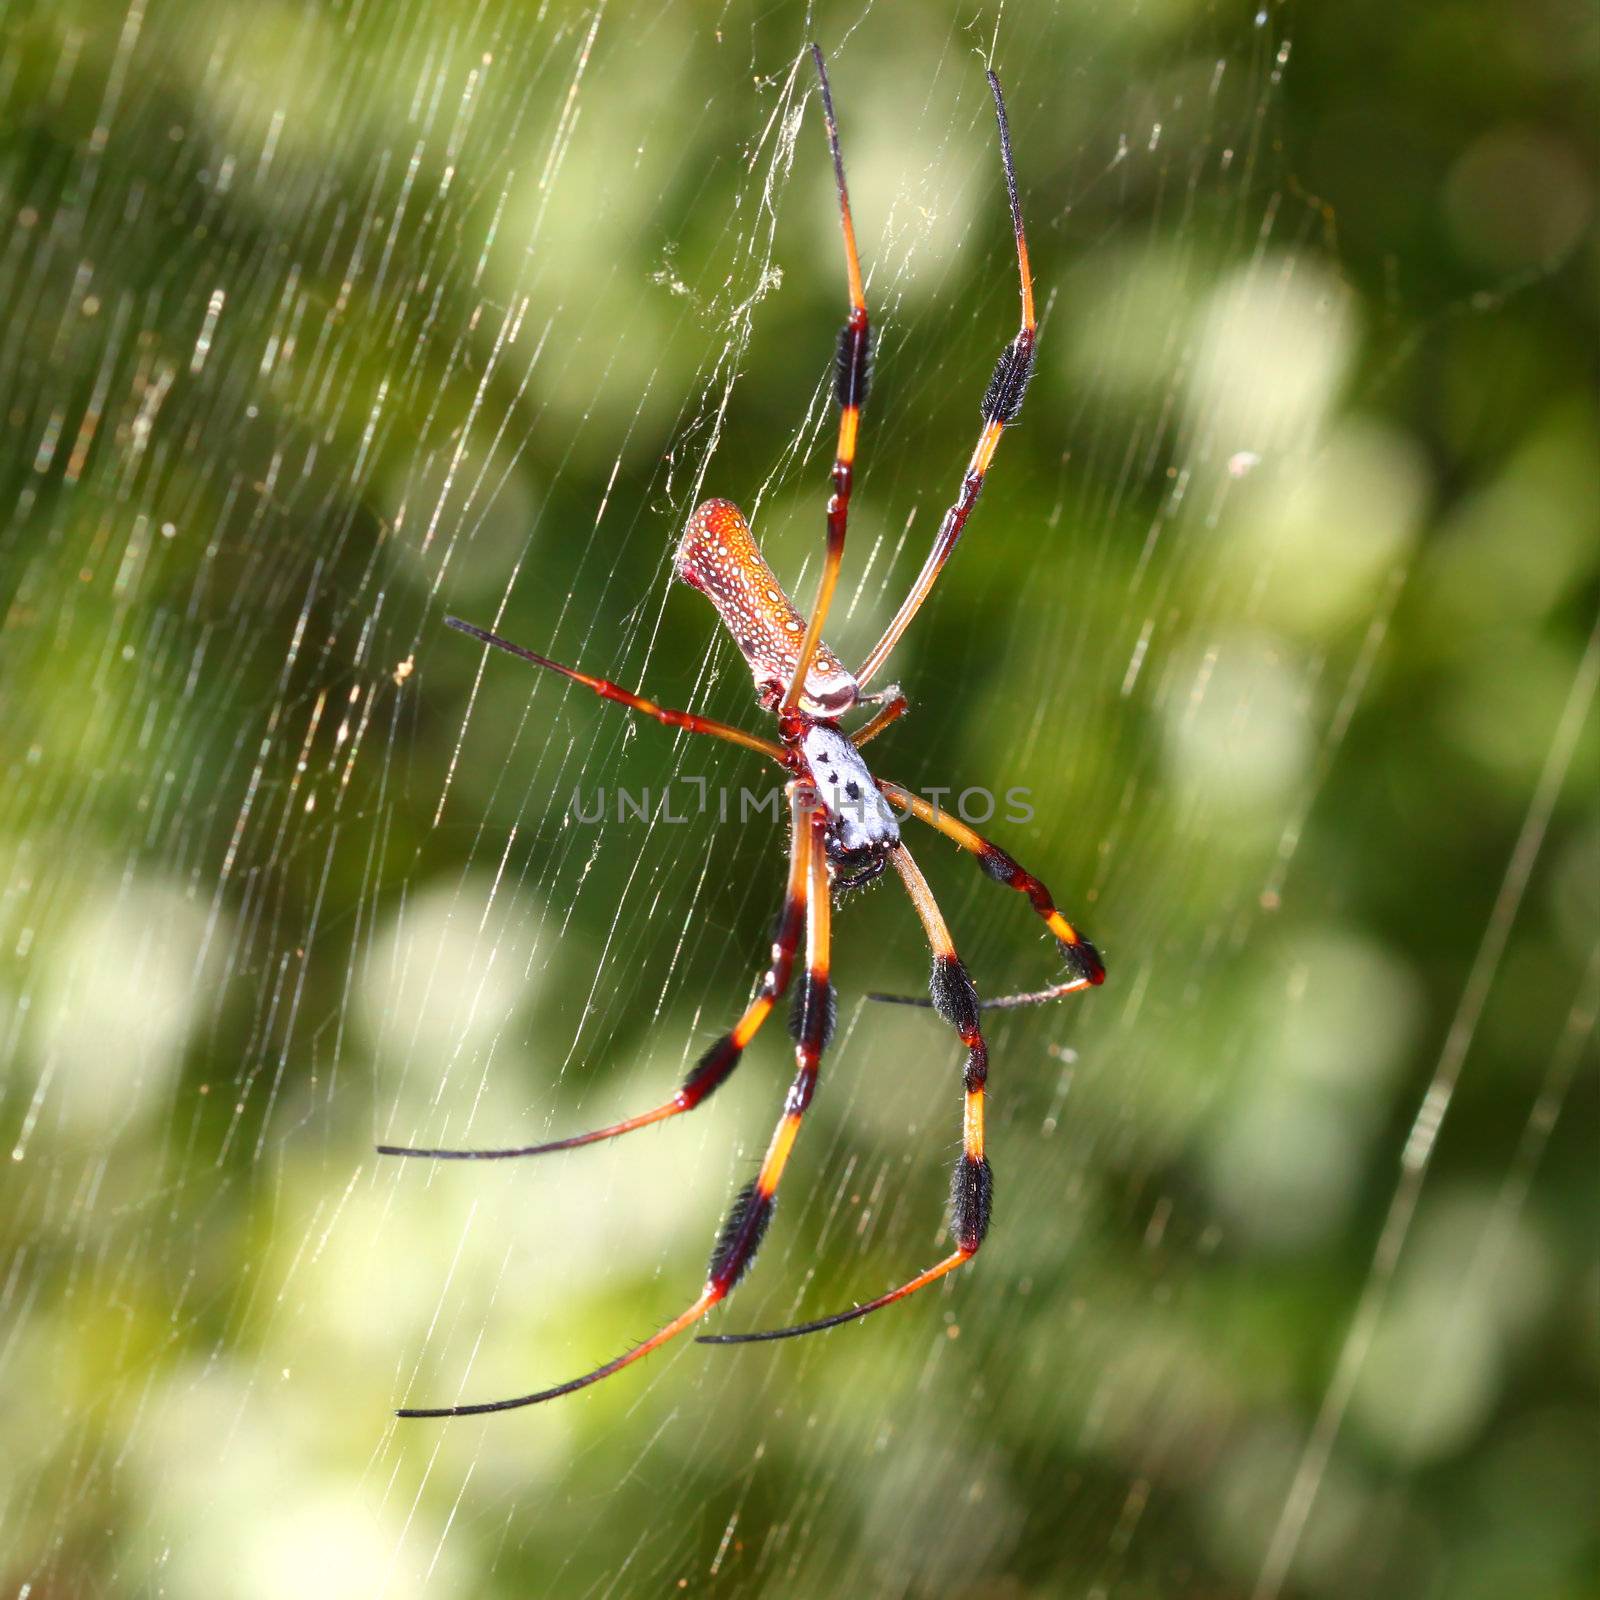 Golden Silk Orb-weaver Spider (Nephila clavipes) in central Florida.